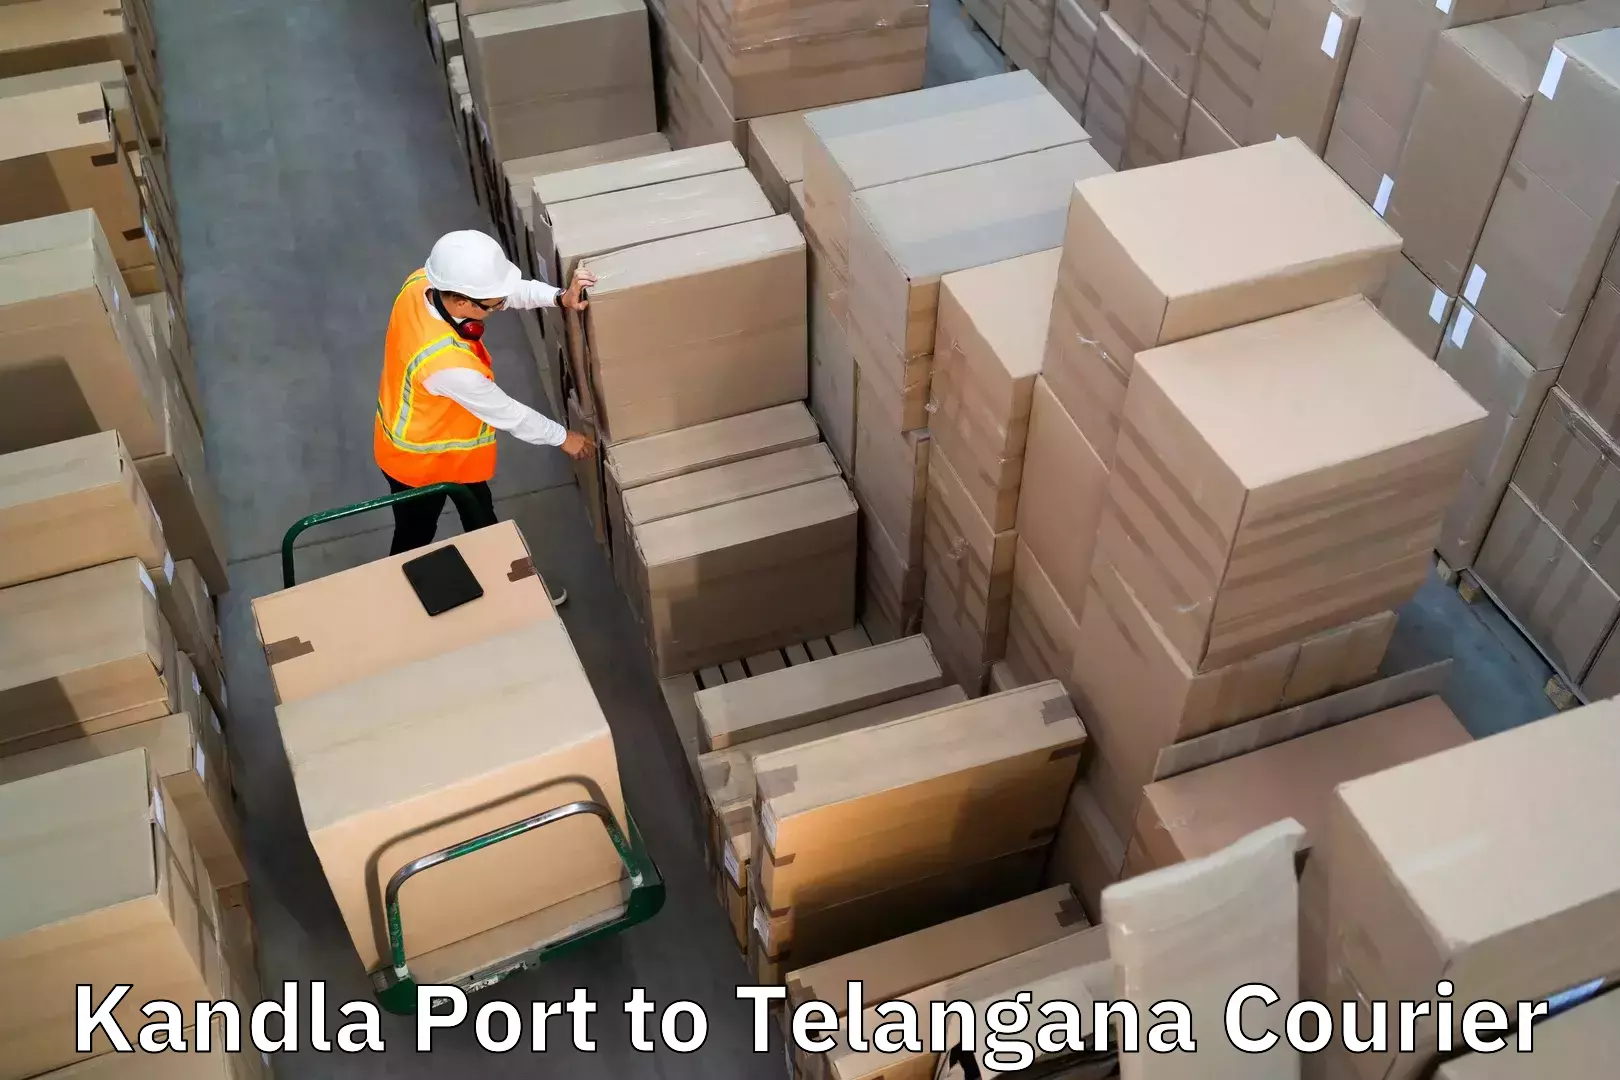 Baggage transport network Kandla Port to Jammikunta